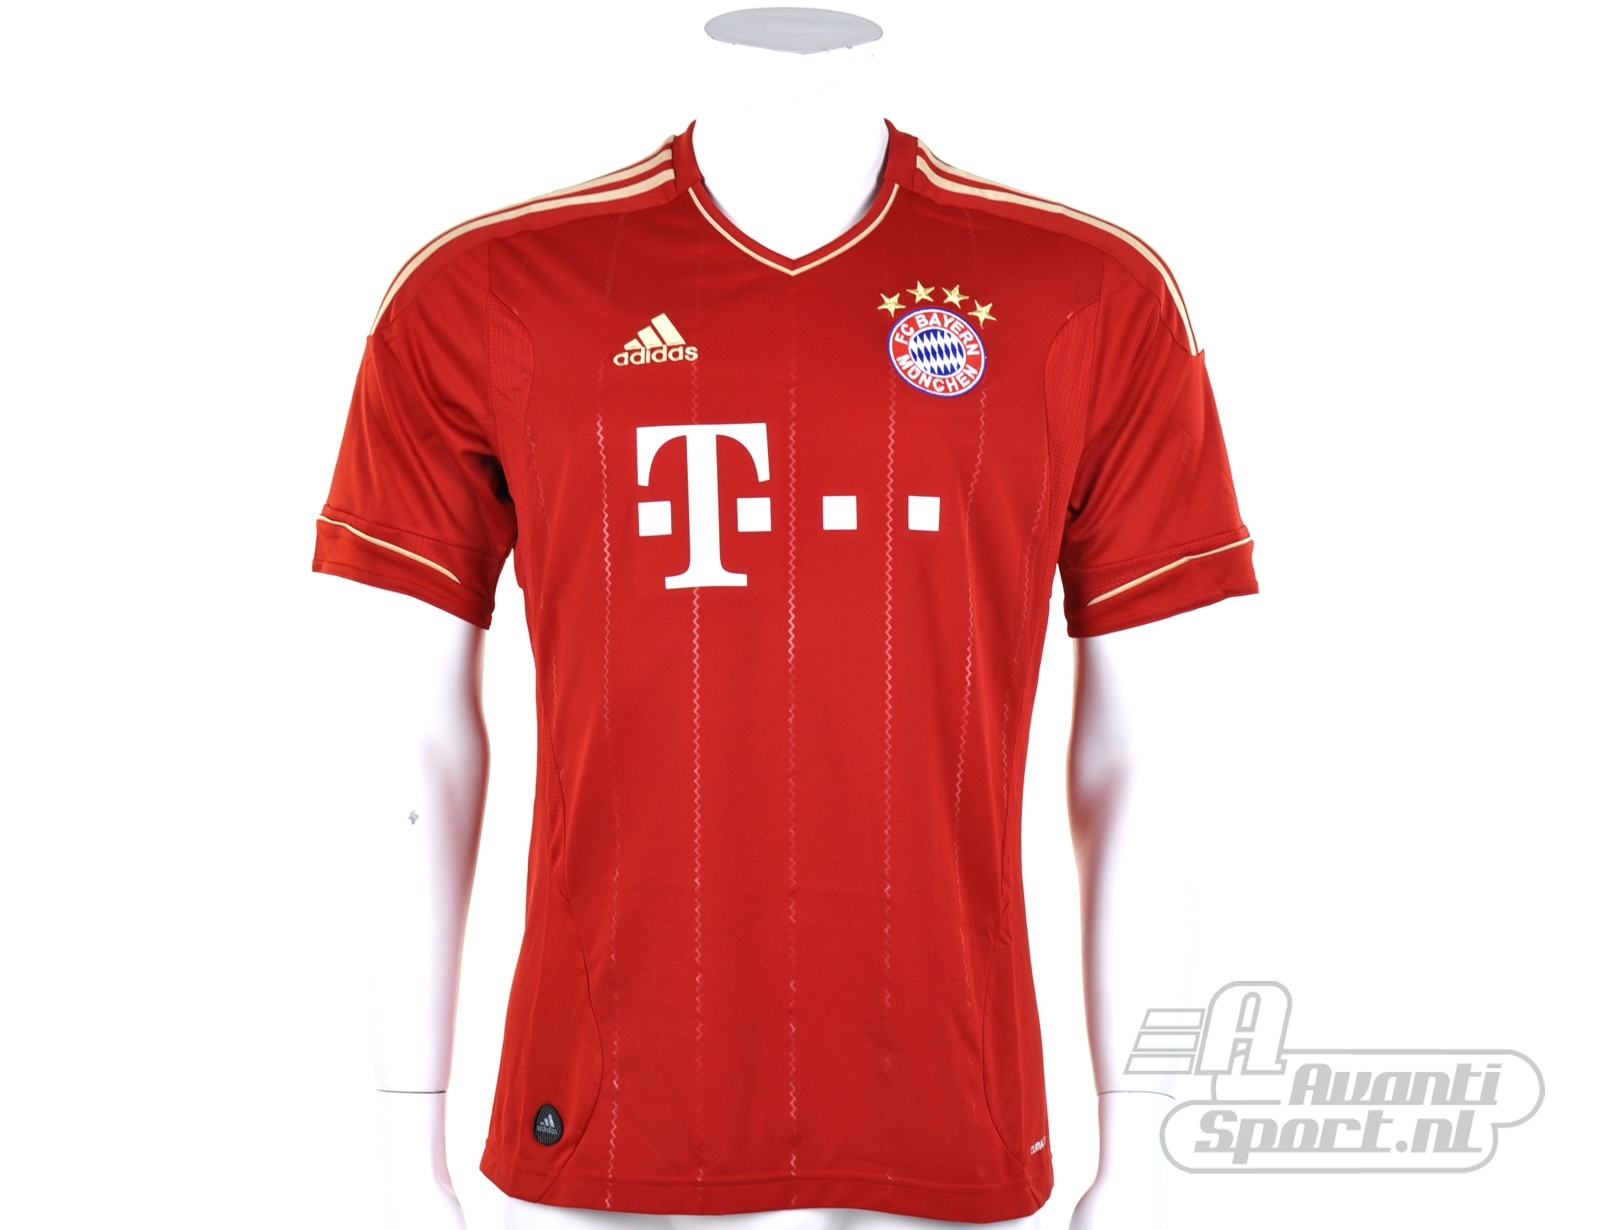 Avantisport - Adidas - Fc Bayern München Home Jersey - Adidas Fc Bayern München